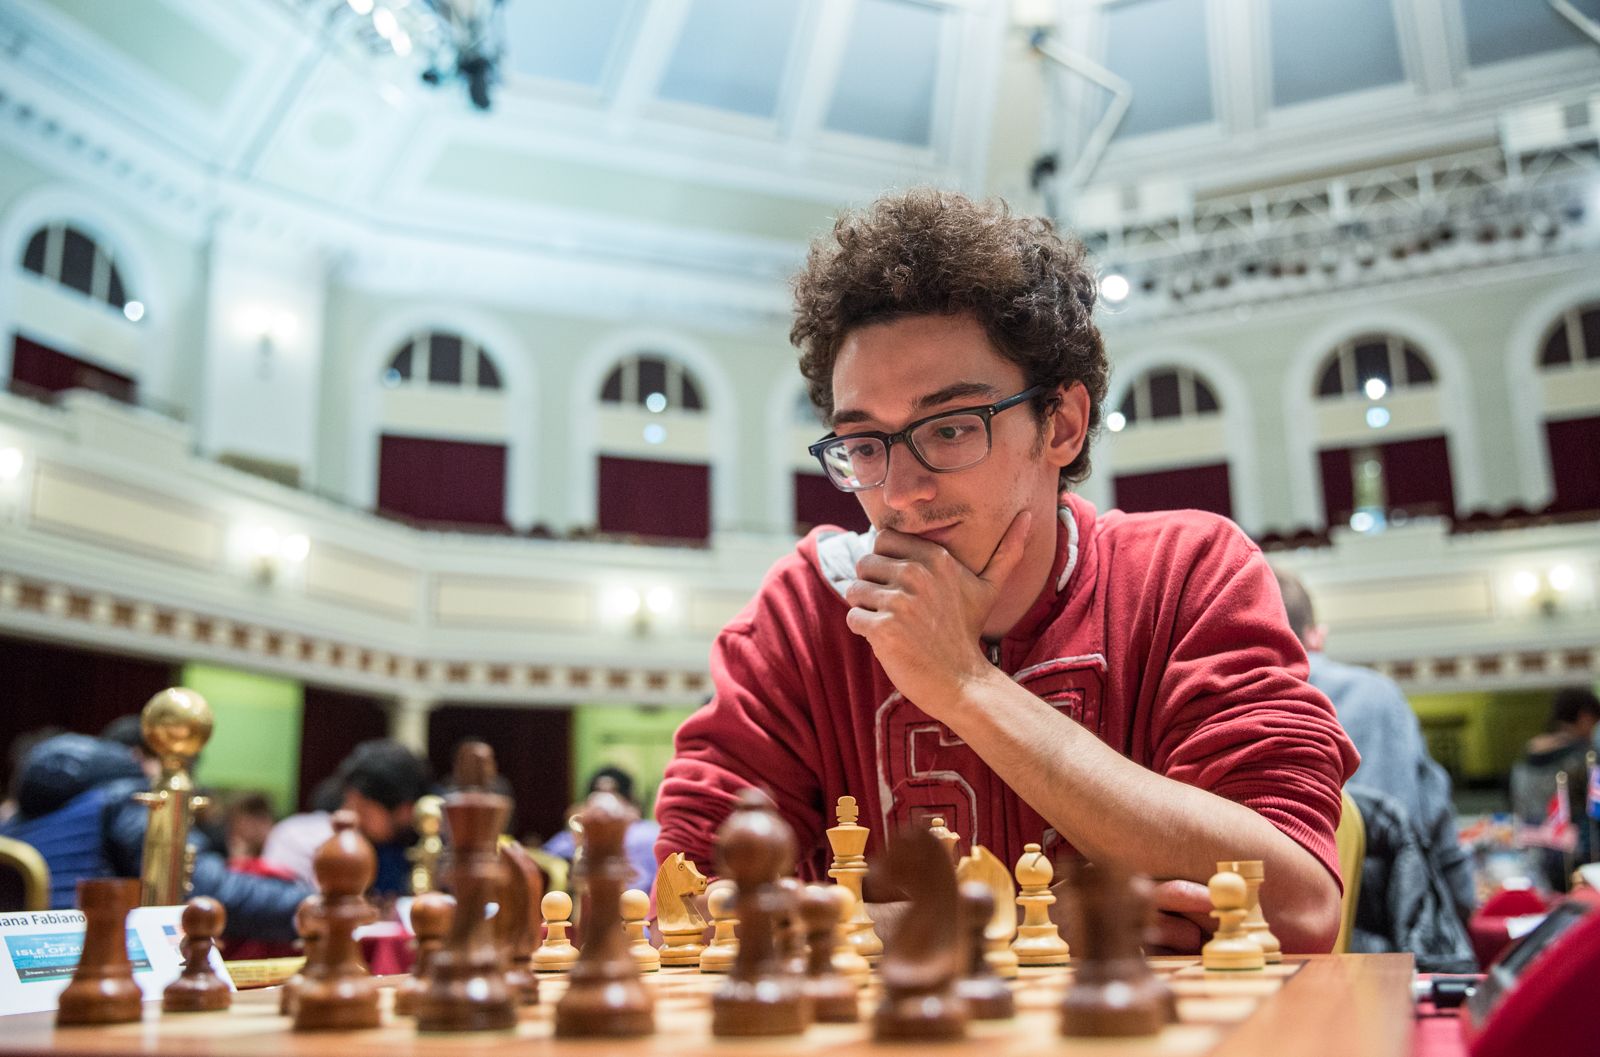 Fabiano Caruana  Top Chess Players 